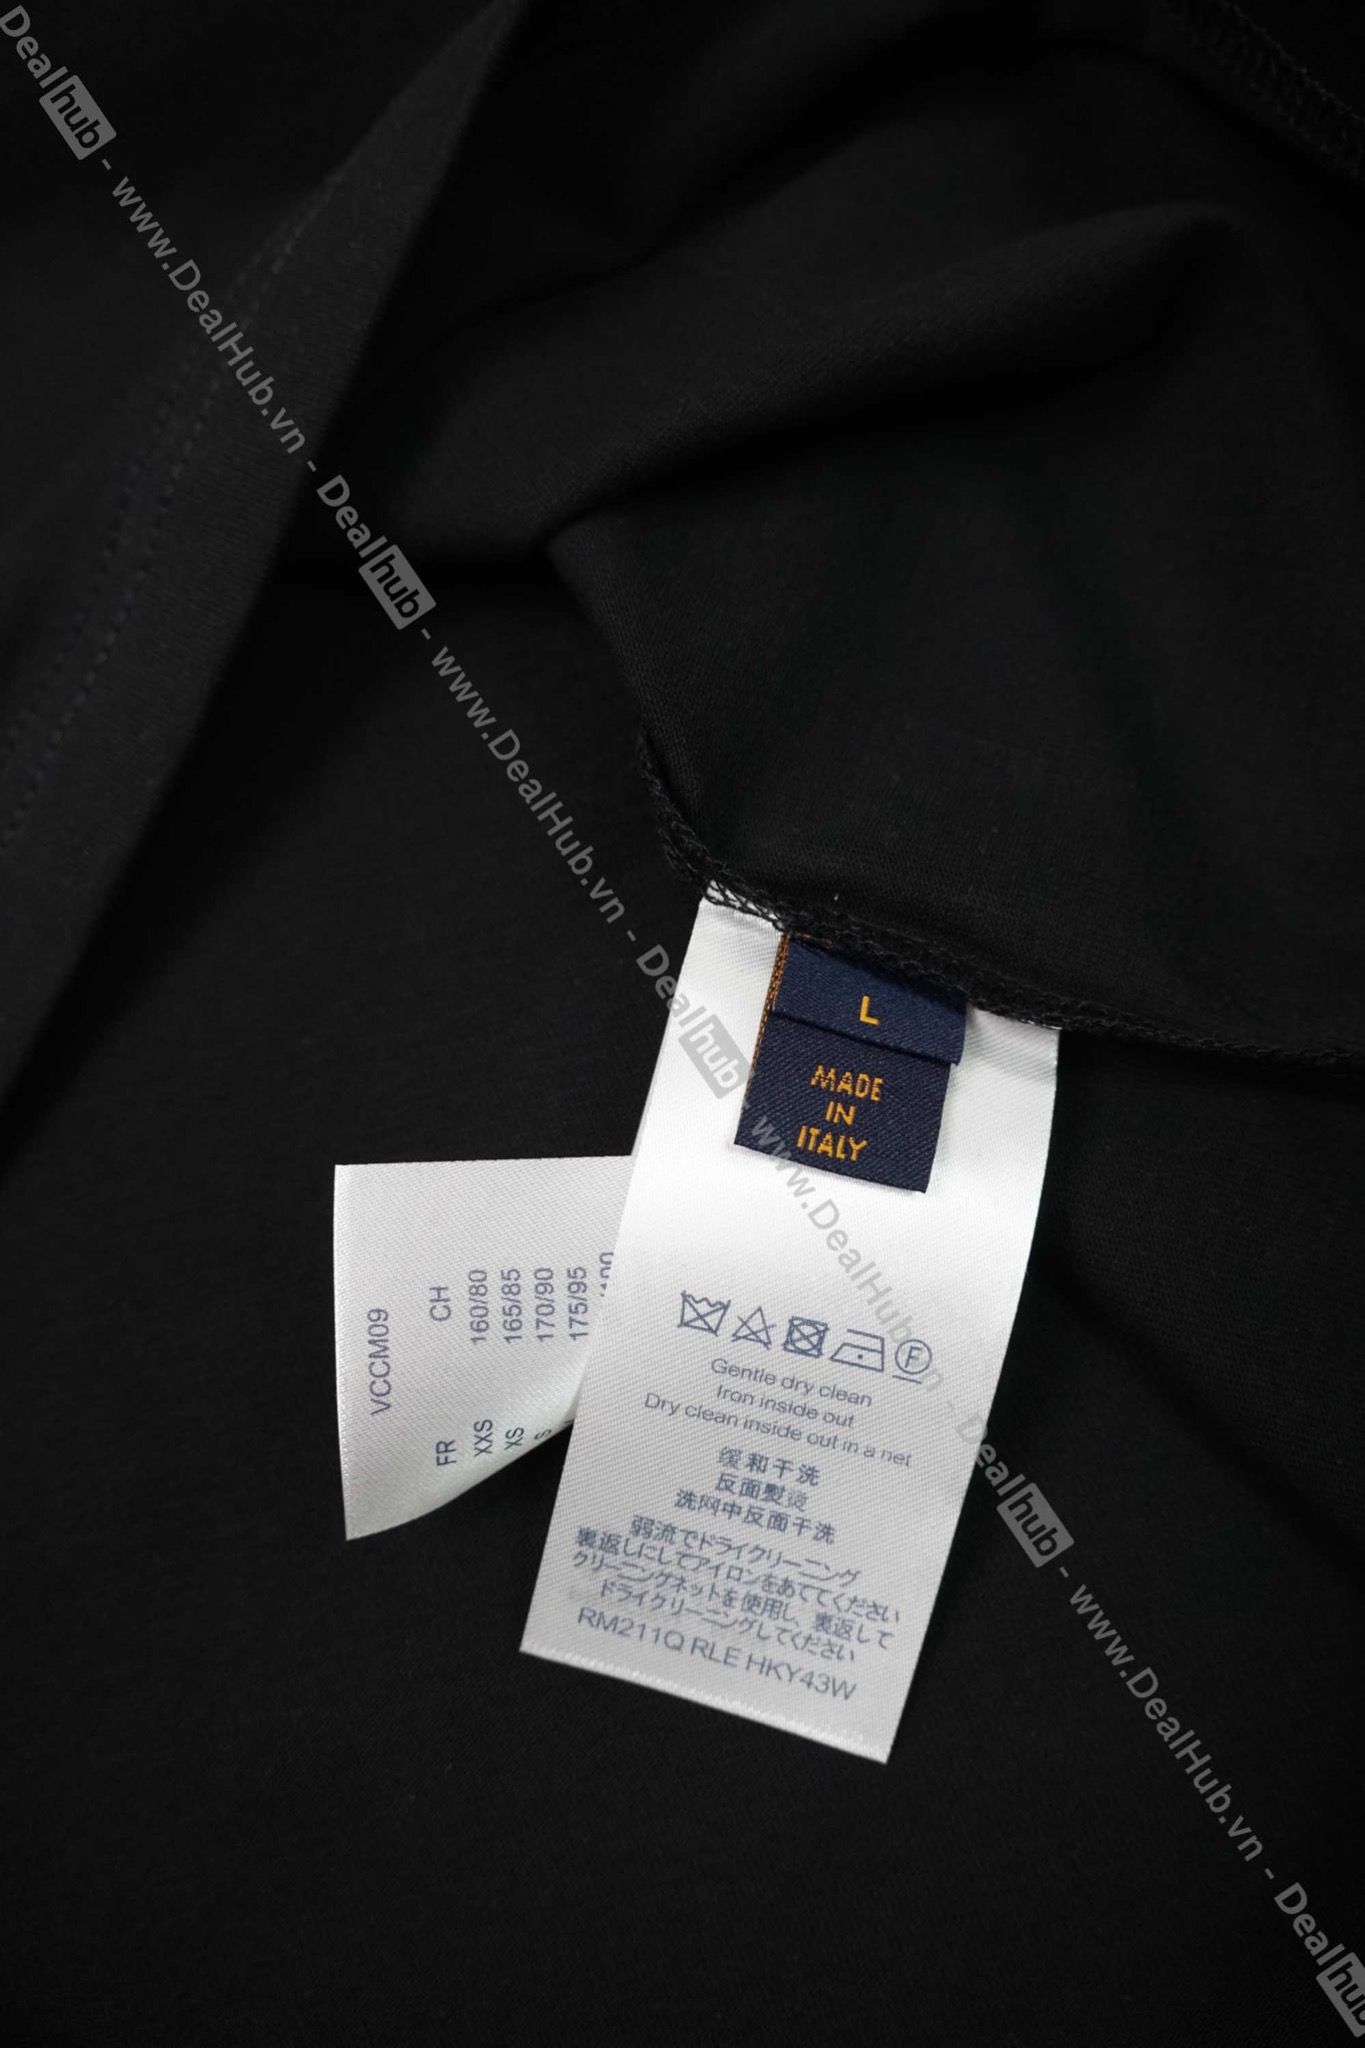 How To Spot Fake Louis Vuitton TShirts  Legit Check By Ch